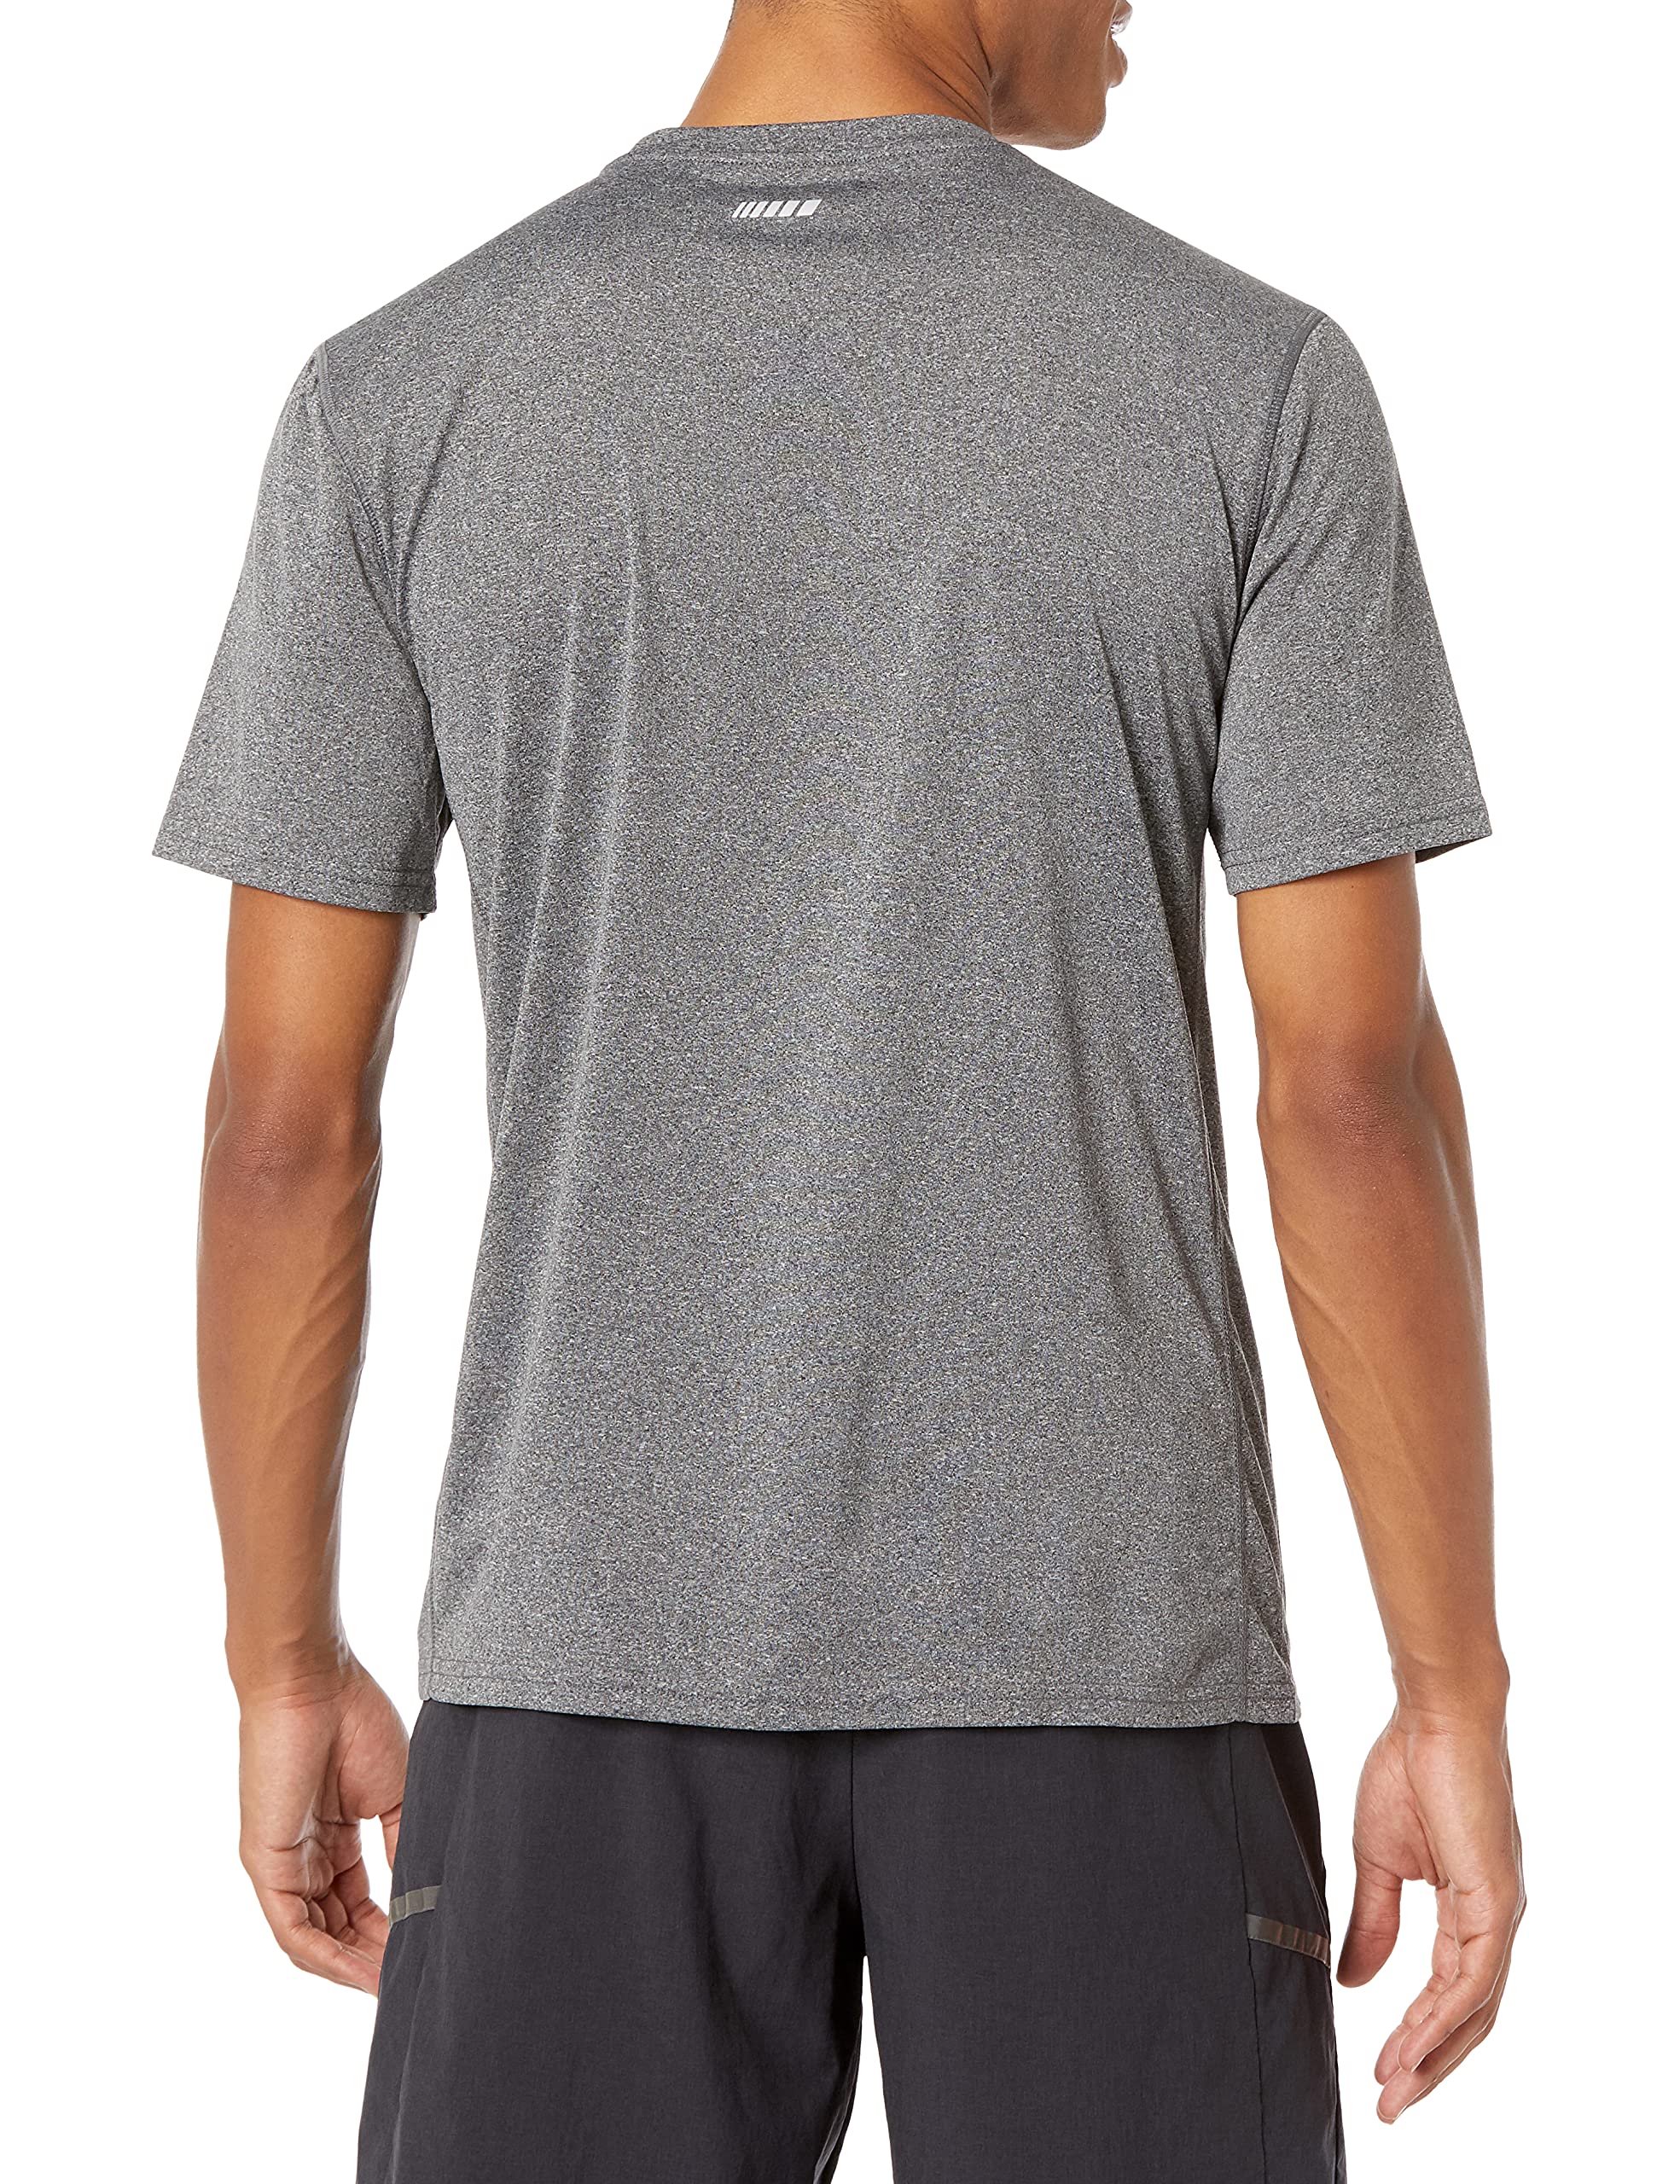 Amazon Essentials Men's Tech Stretch Short-Sleeve T-Shirt